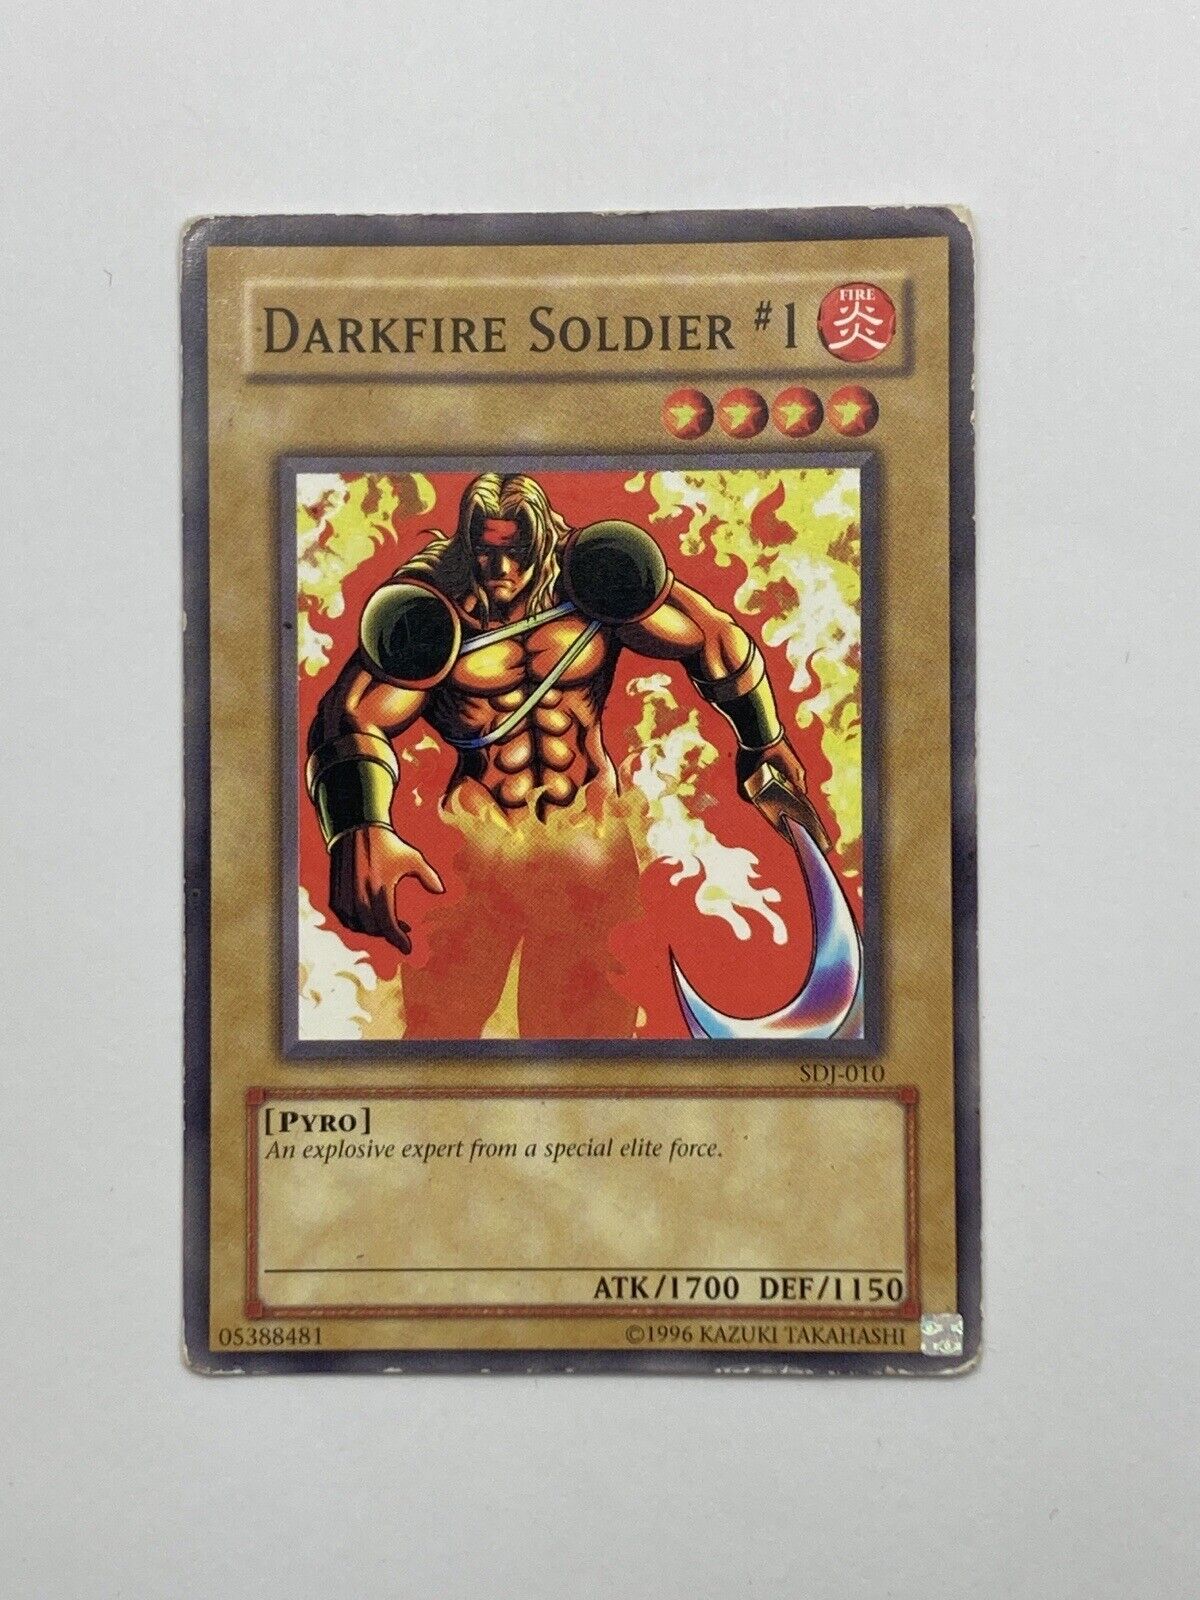 DARKFIRE SOLDIER #1 - SDJ-010 - NON HOLO - UNLIMITED -YU-GI-OH CARD